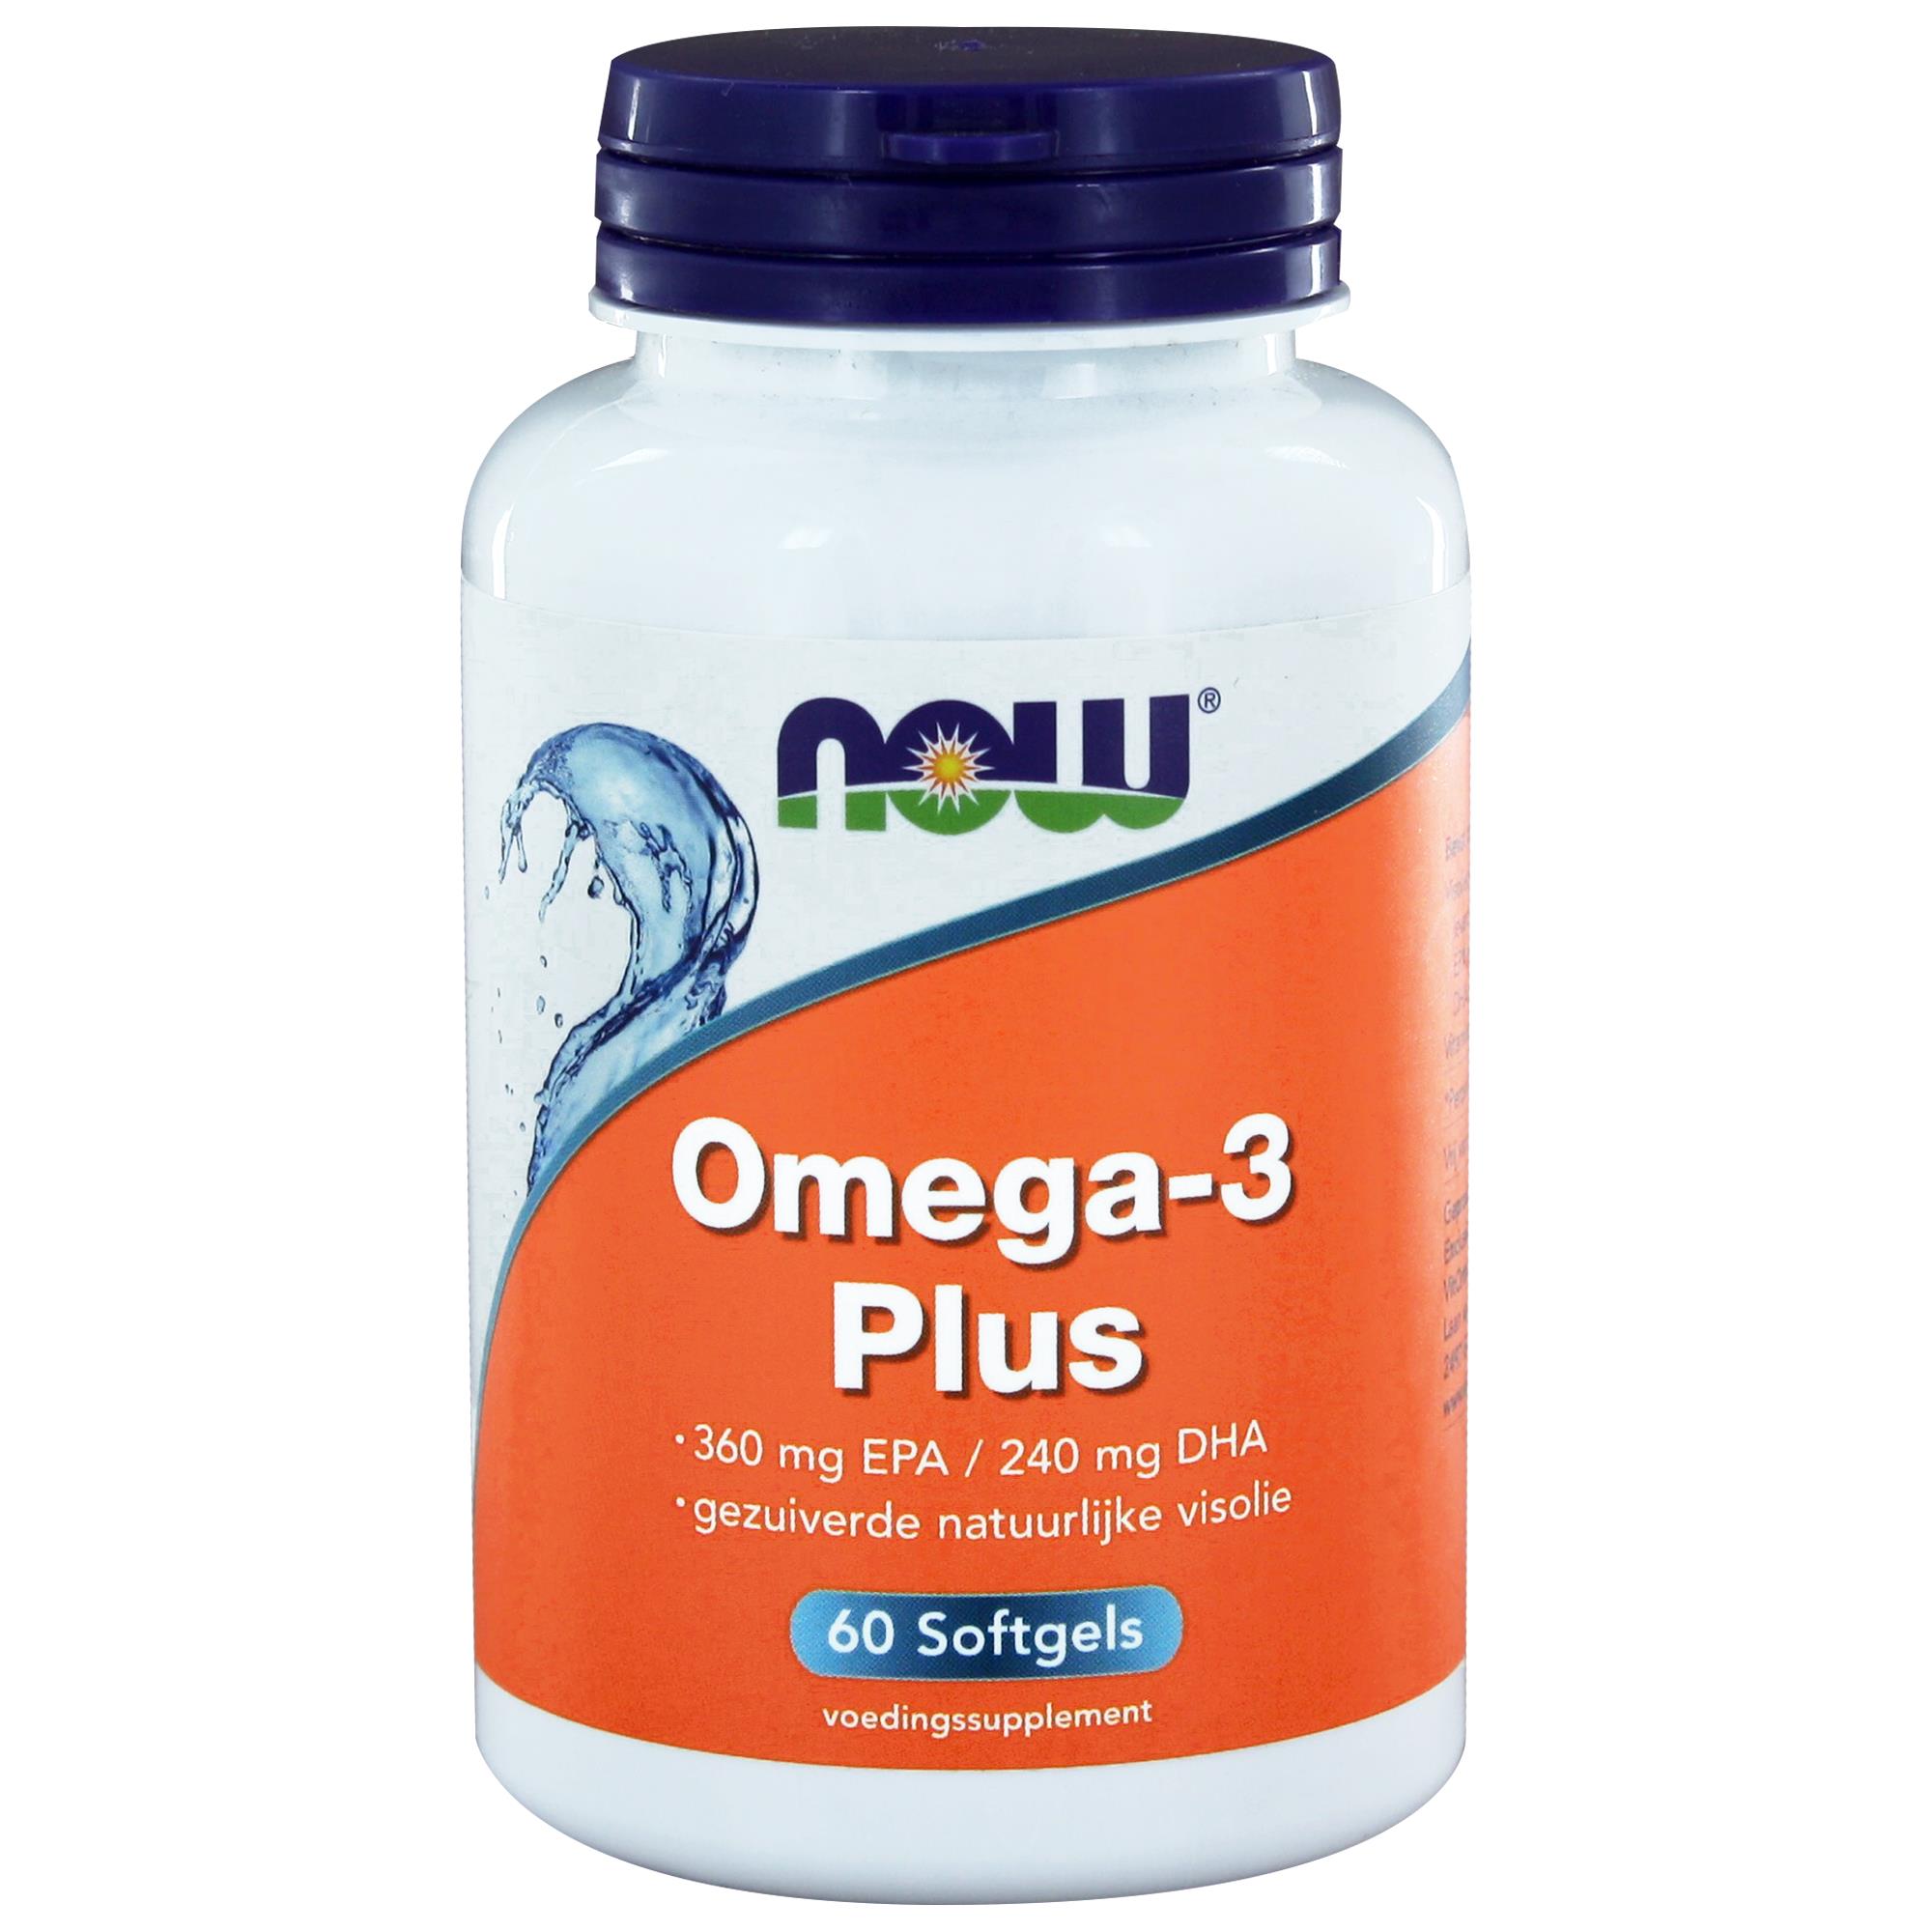 Omega-3 Plus (High EPA / DHA) - 60 softgels